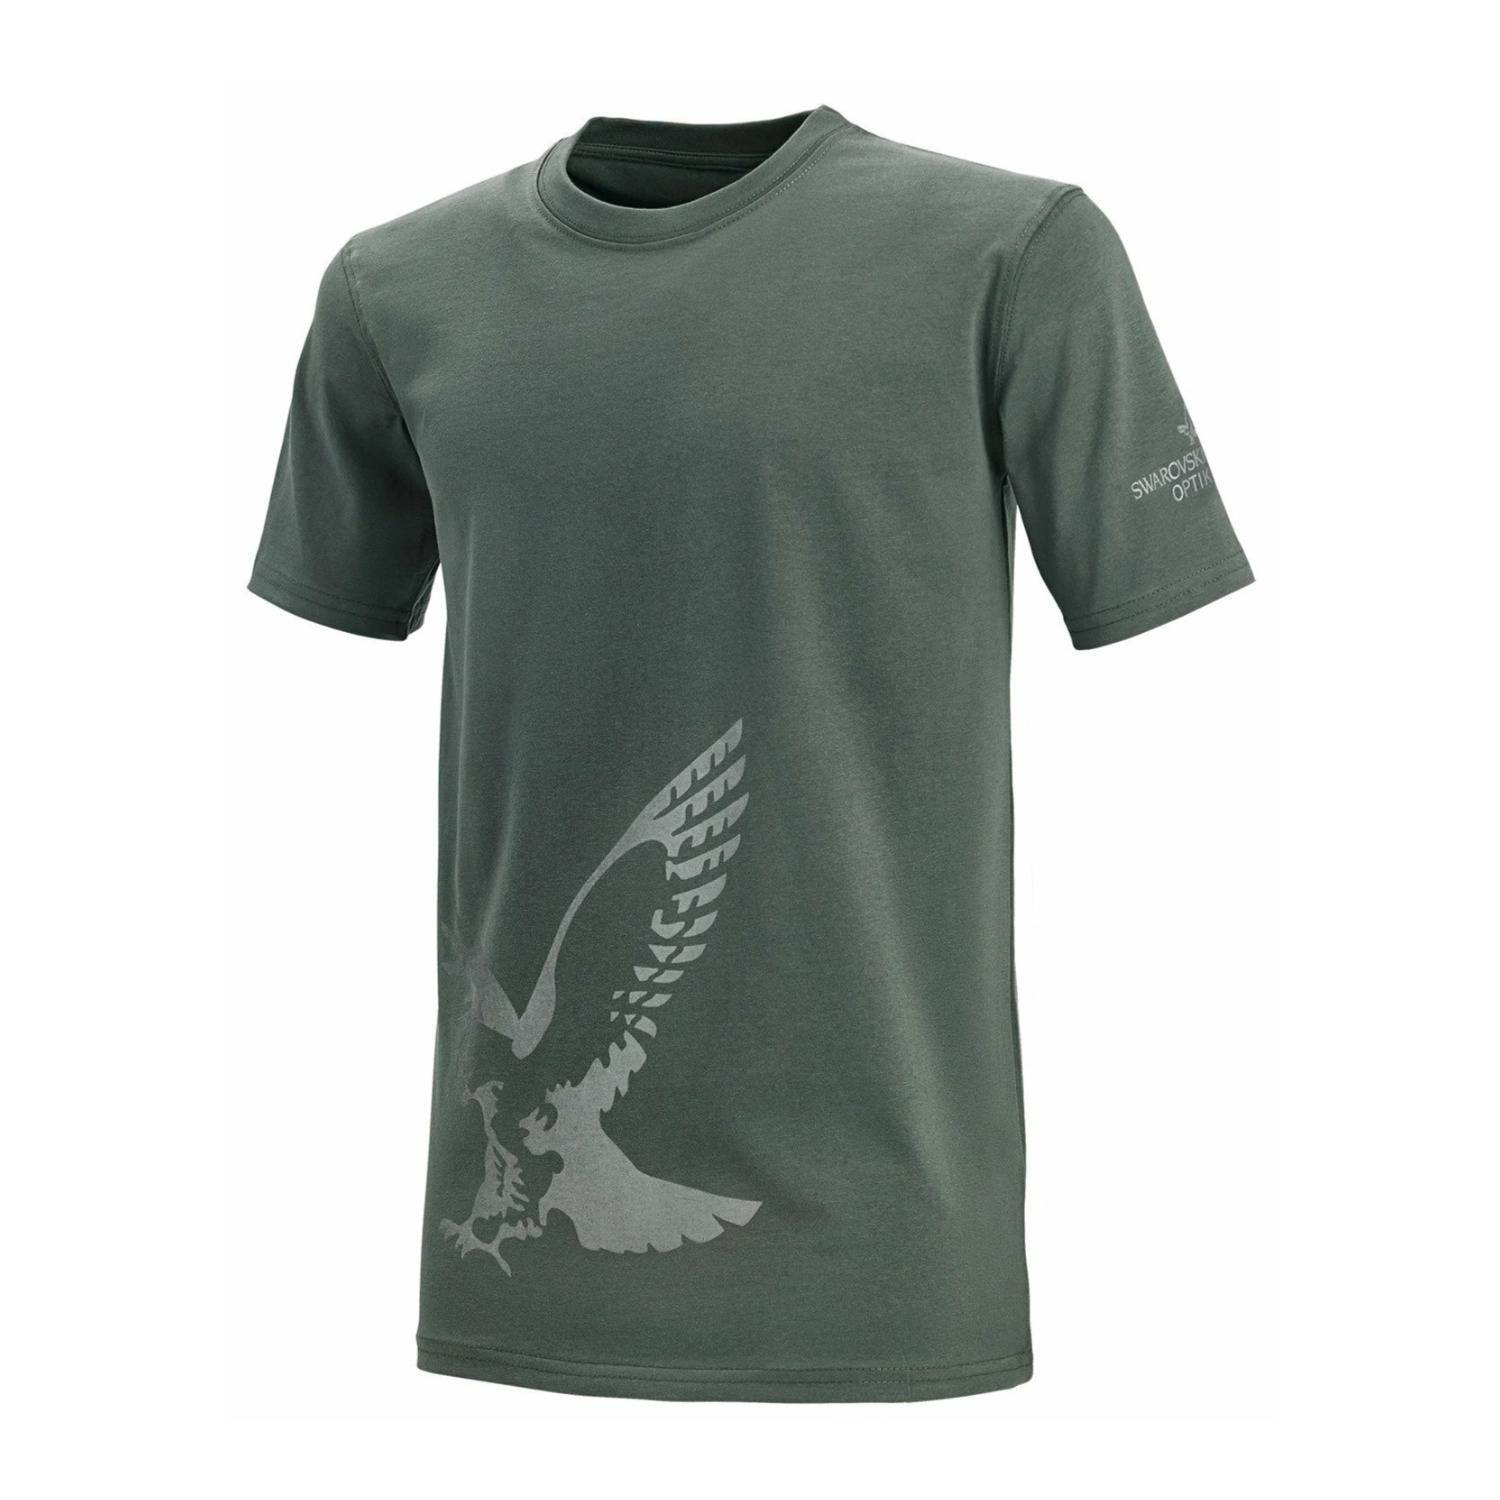 Swarovski Optik T-Shirt with Large Hawk Graphic (XL, Green)